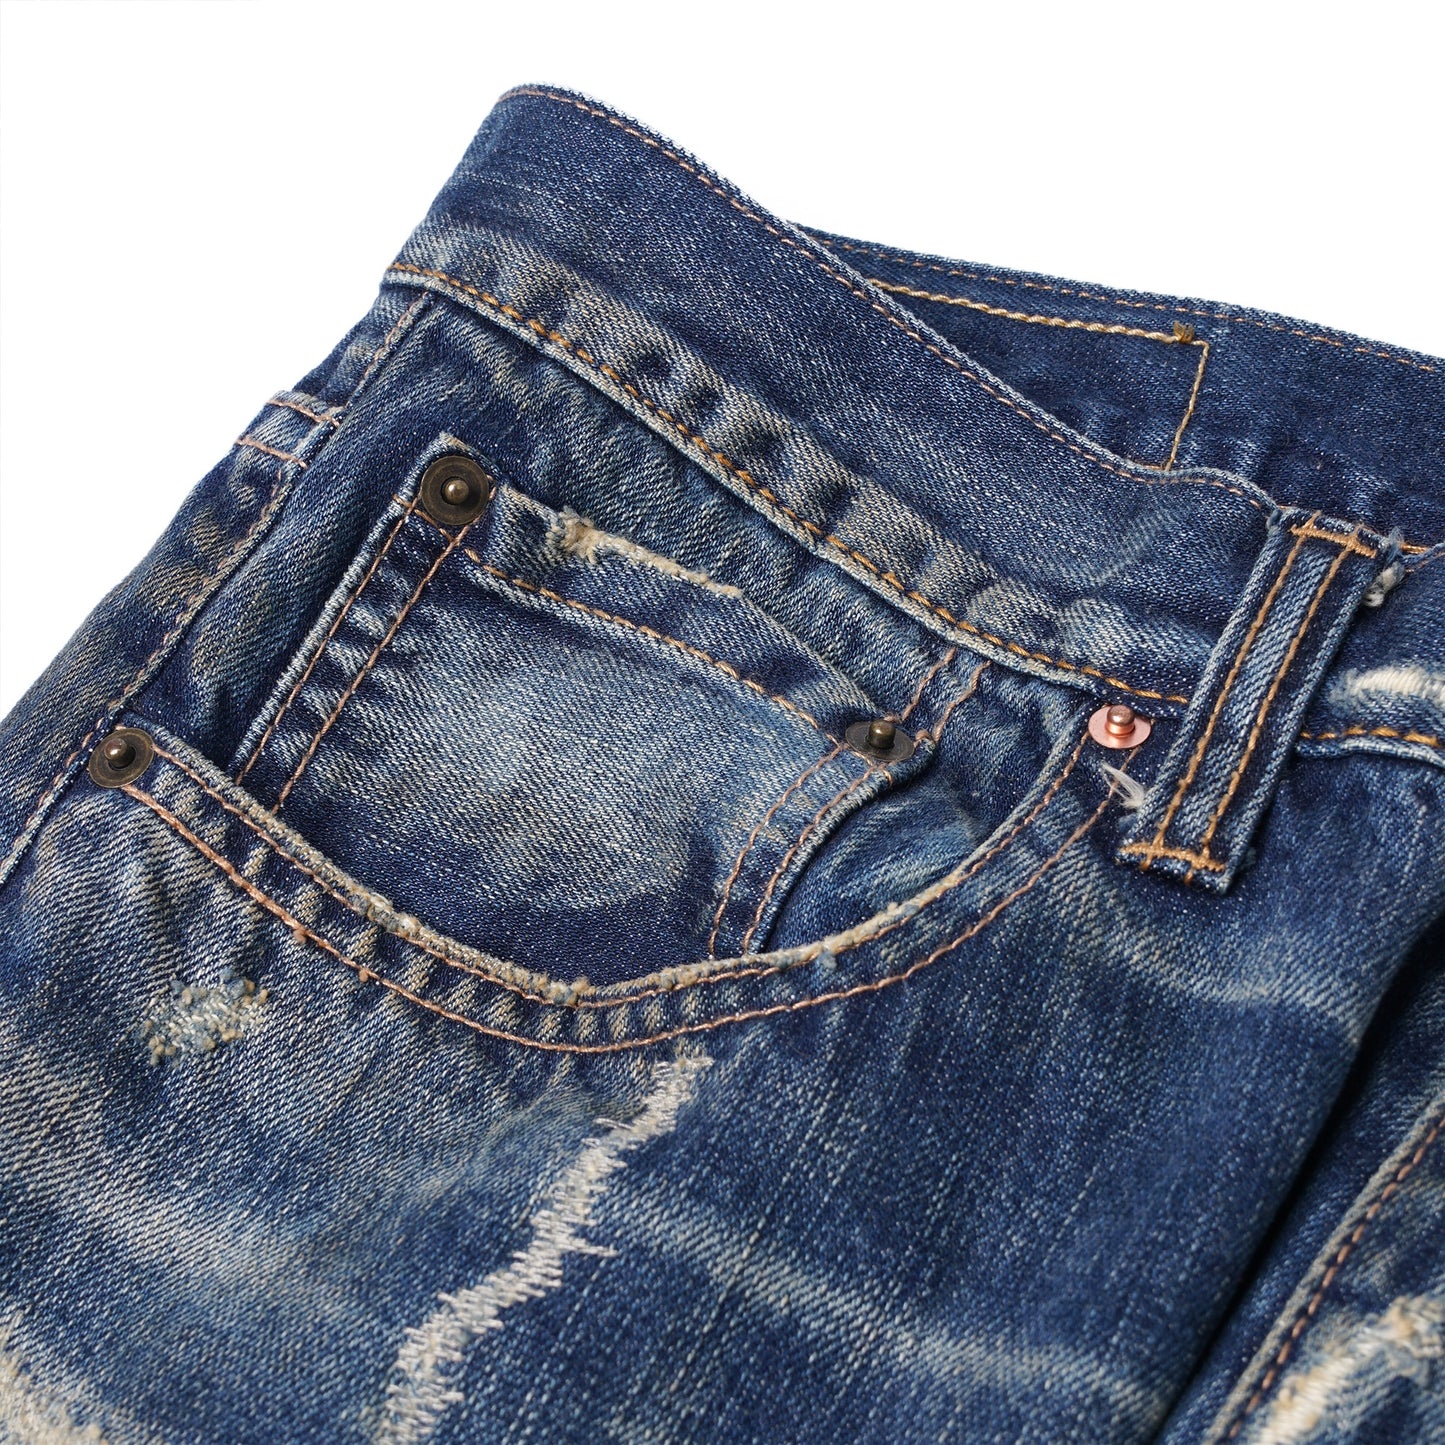 【訂製】C02 14oz. Dirty Damaged Slim Cut Jeans